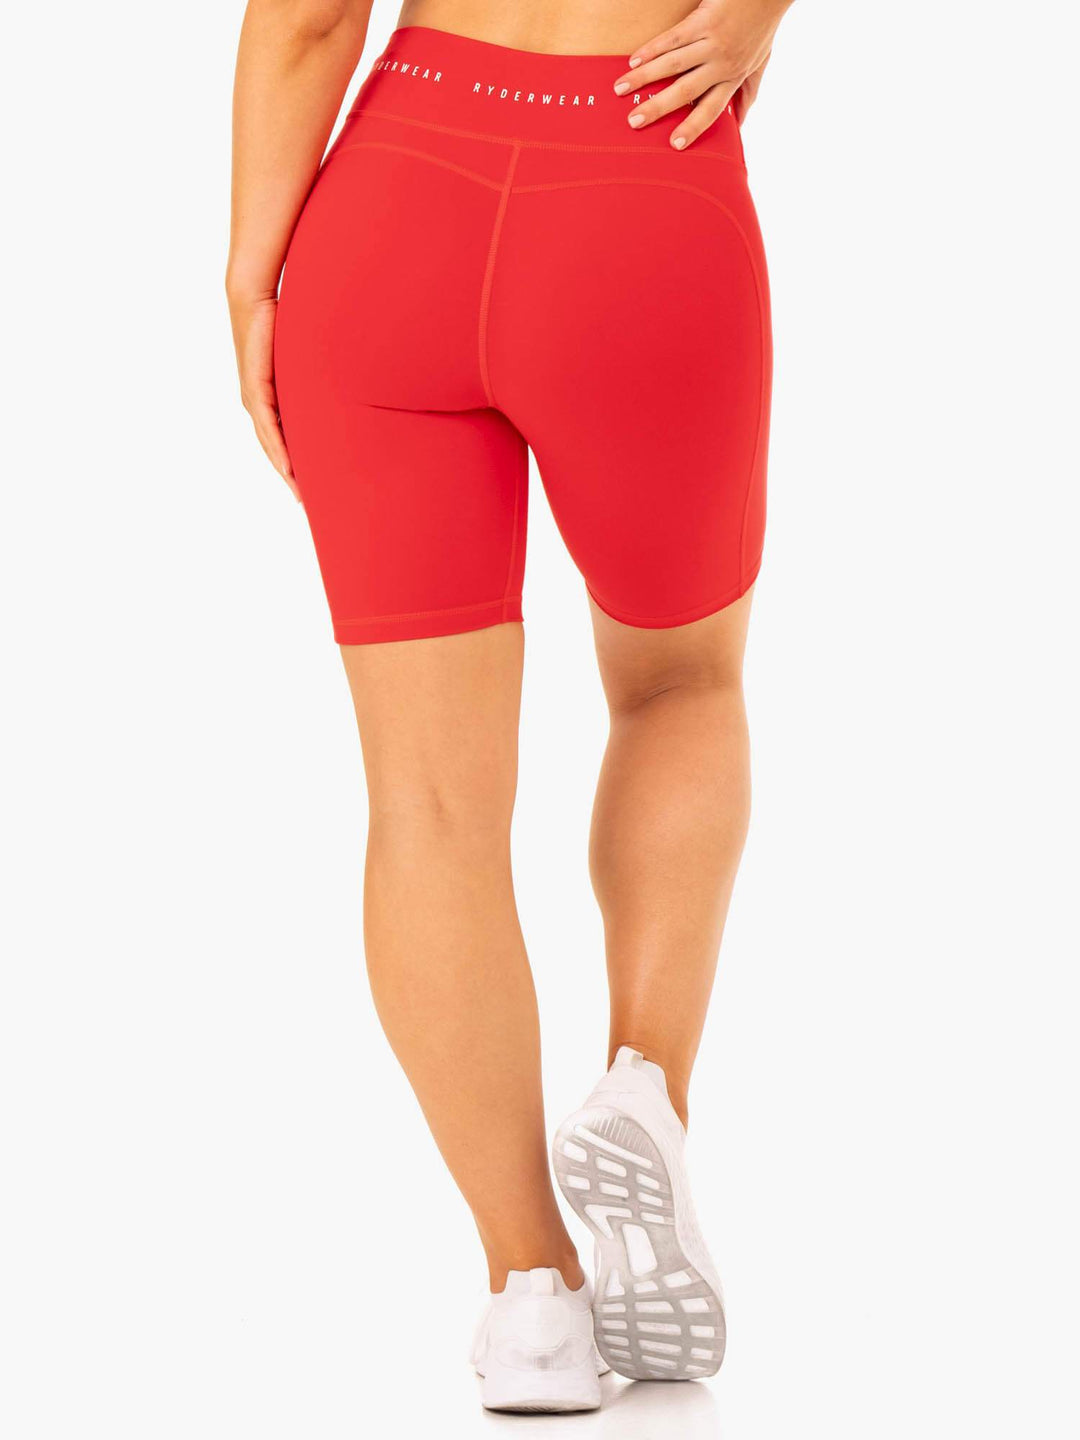 Reflex High Waisted Bike Shorts - Red Clothing Ryderwear 